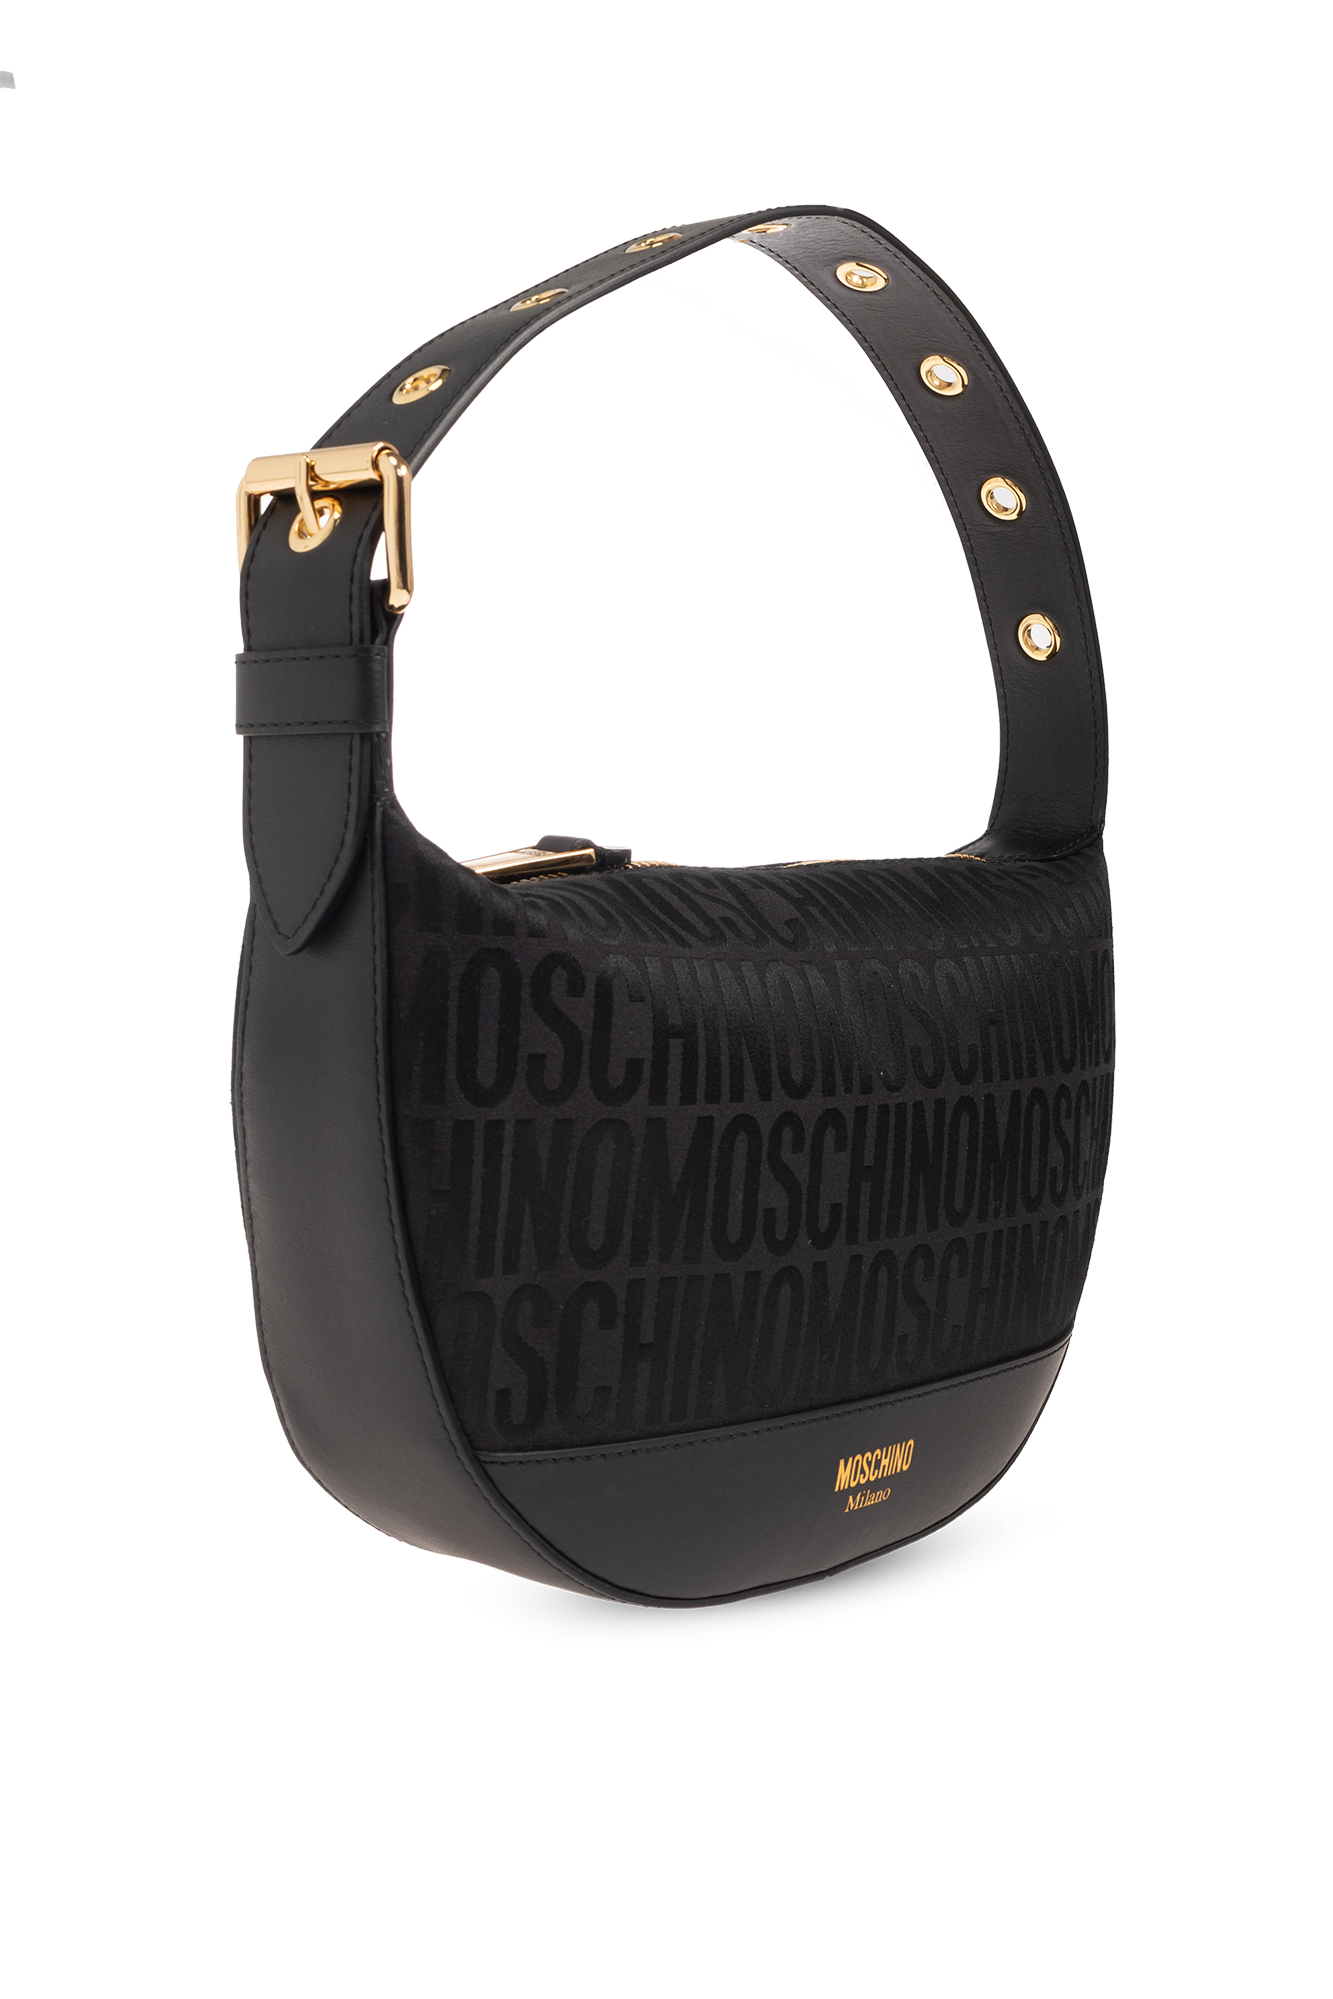 Black Shoulder bag Moschino - Vitkac Spain